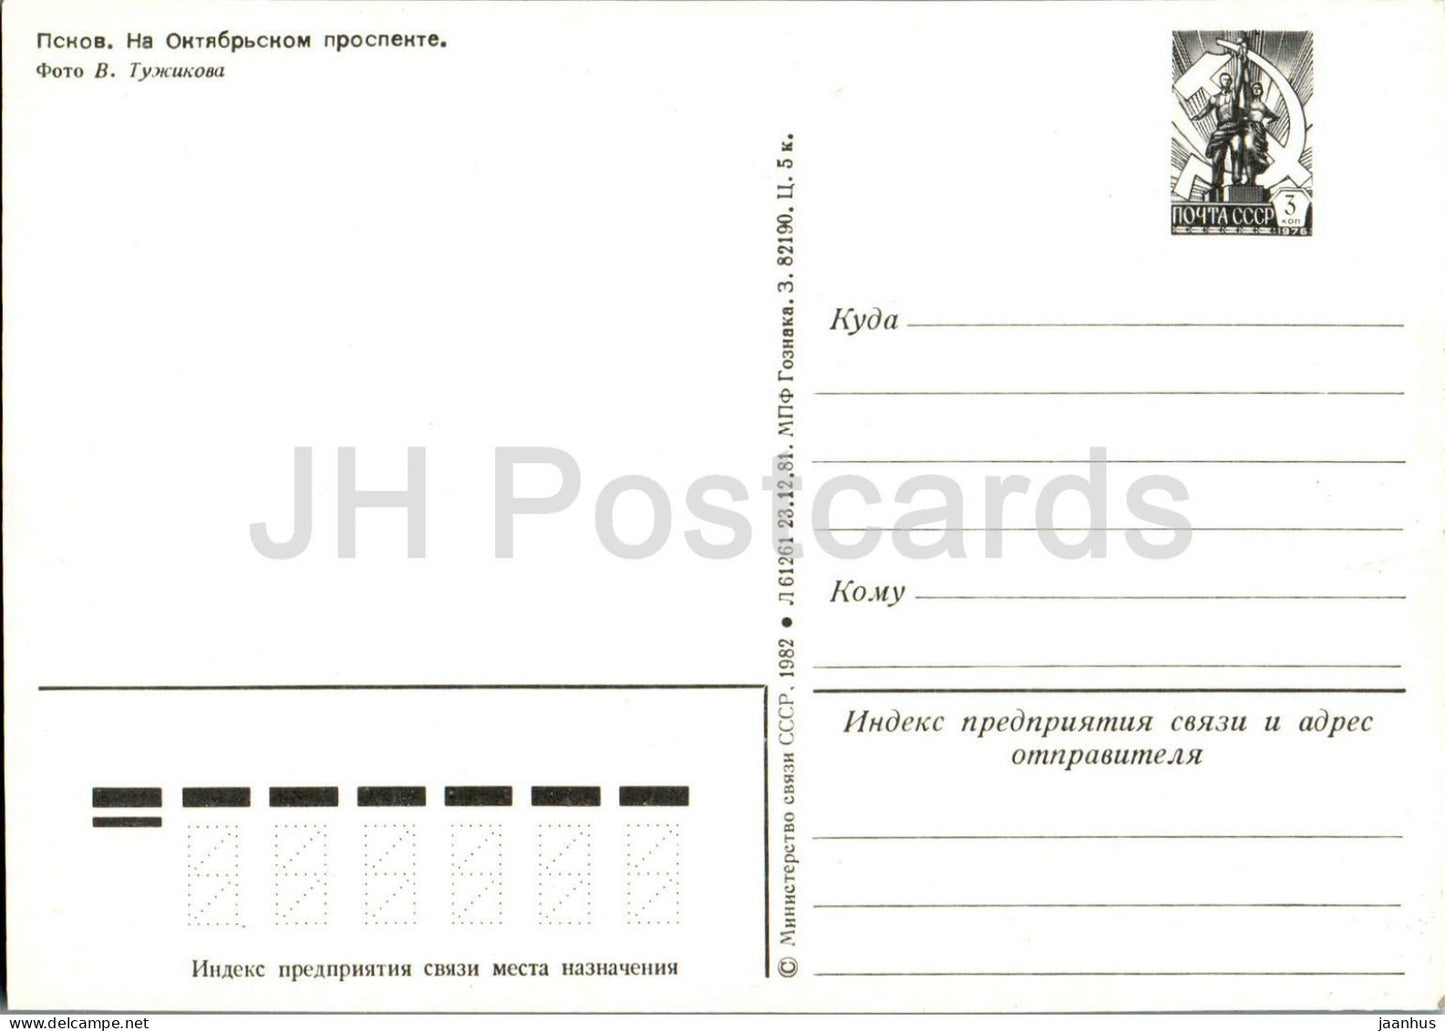 Pskov - Perspective Octobre - Avenue - Entier postal - 1982 - Russie URSS - inutilisé 